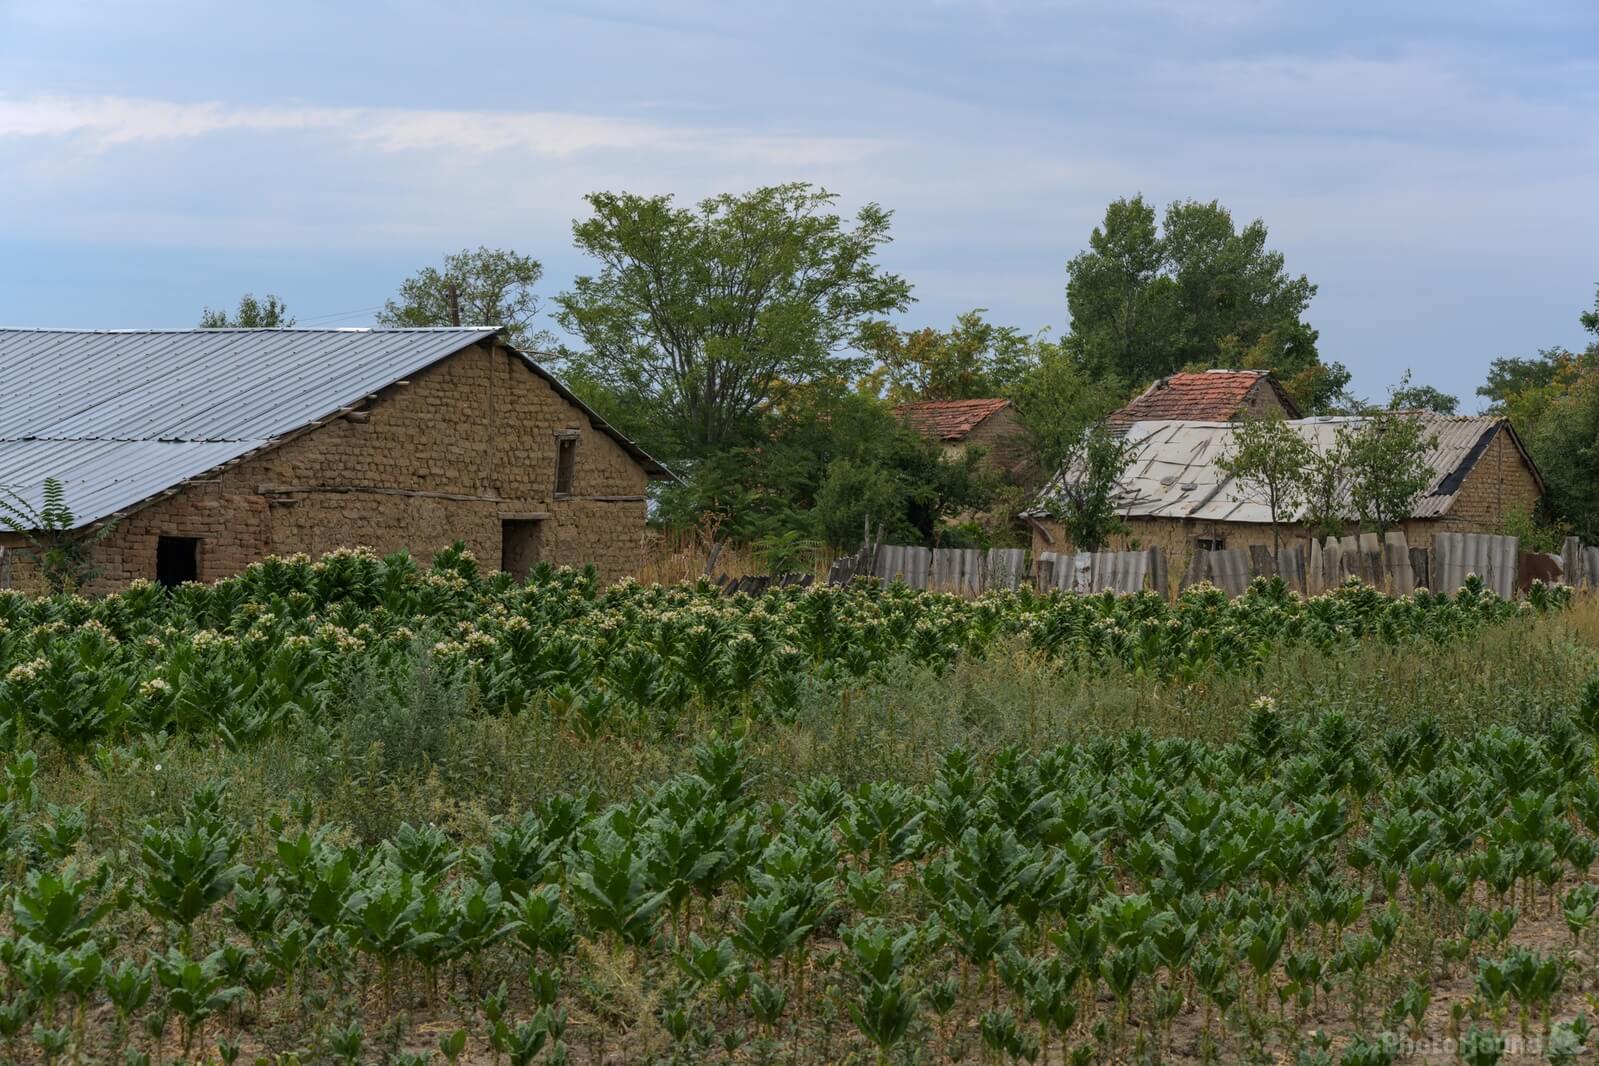 Image of Erekovci Village by Luka Esenko